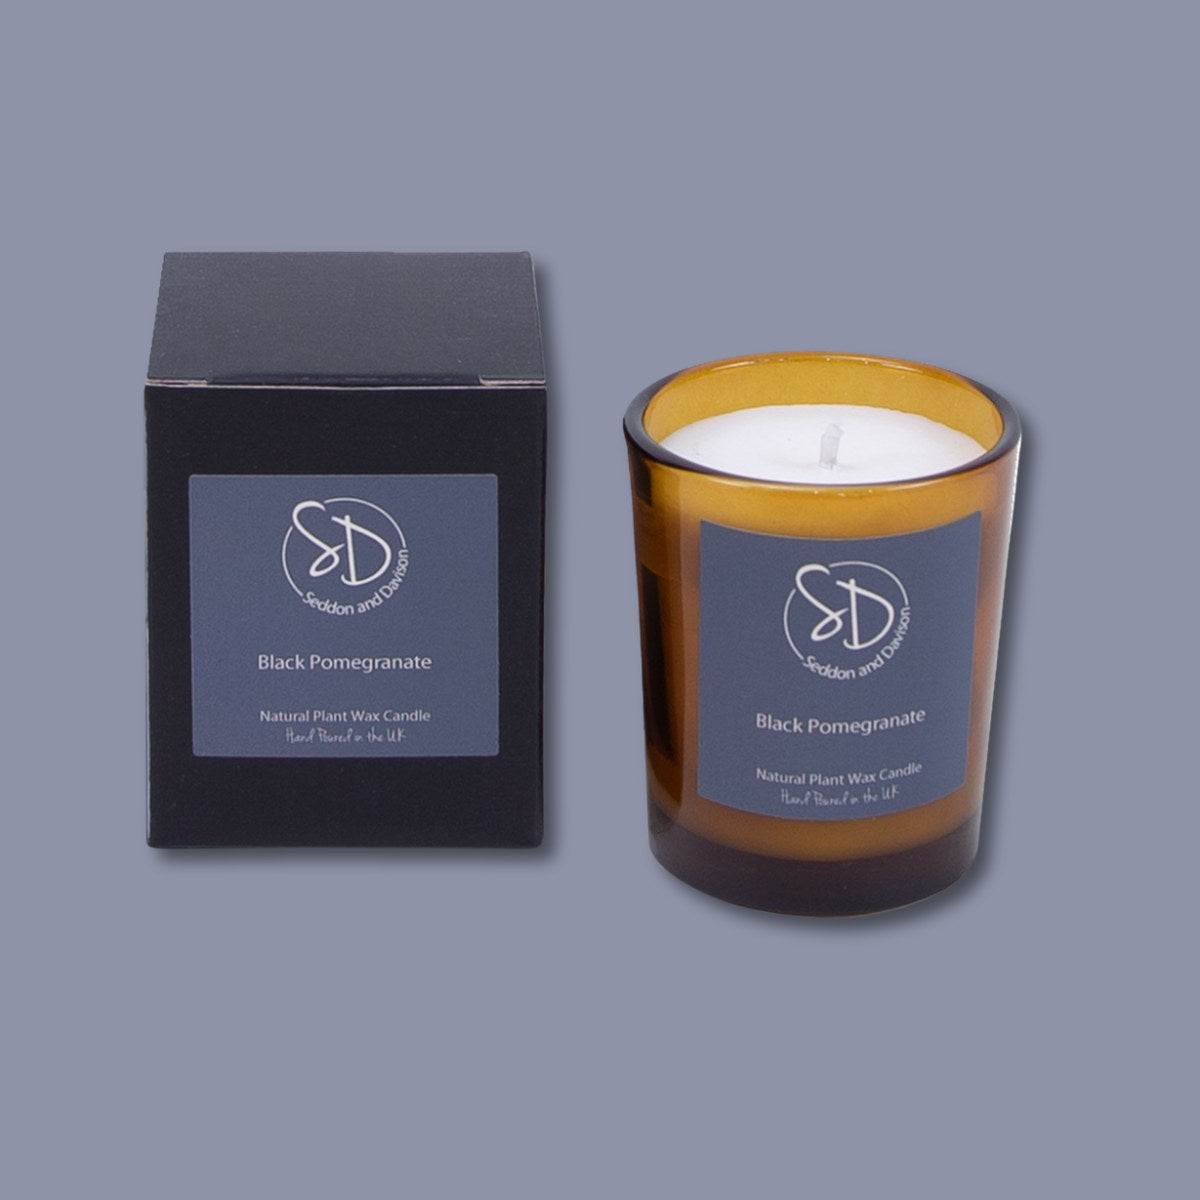 Amber Glass Votive Candle - Black Pomegranate - Seddon and Davison